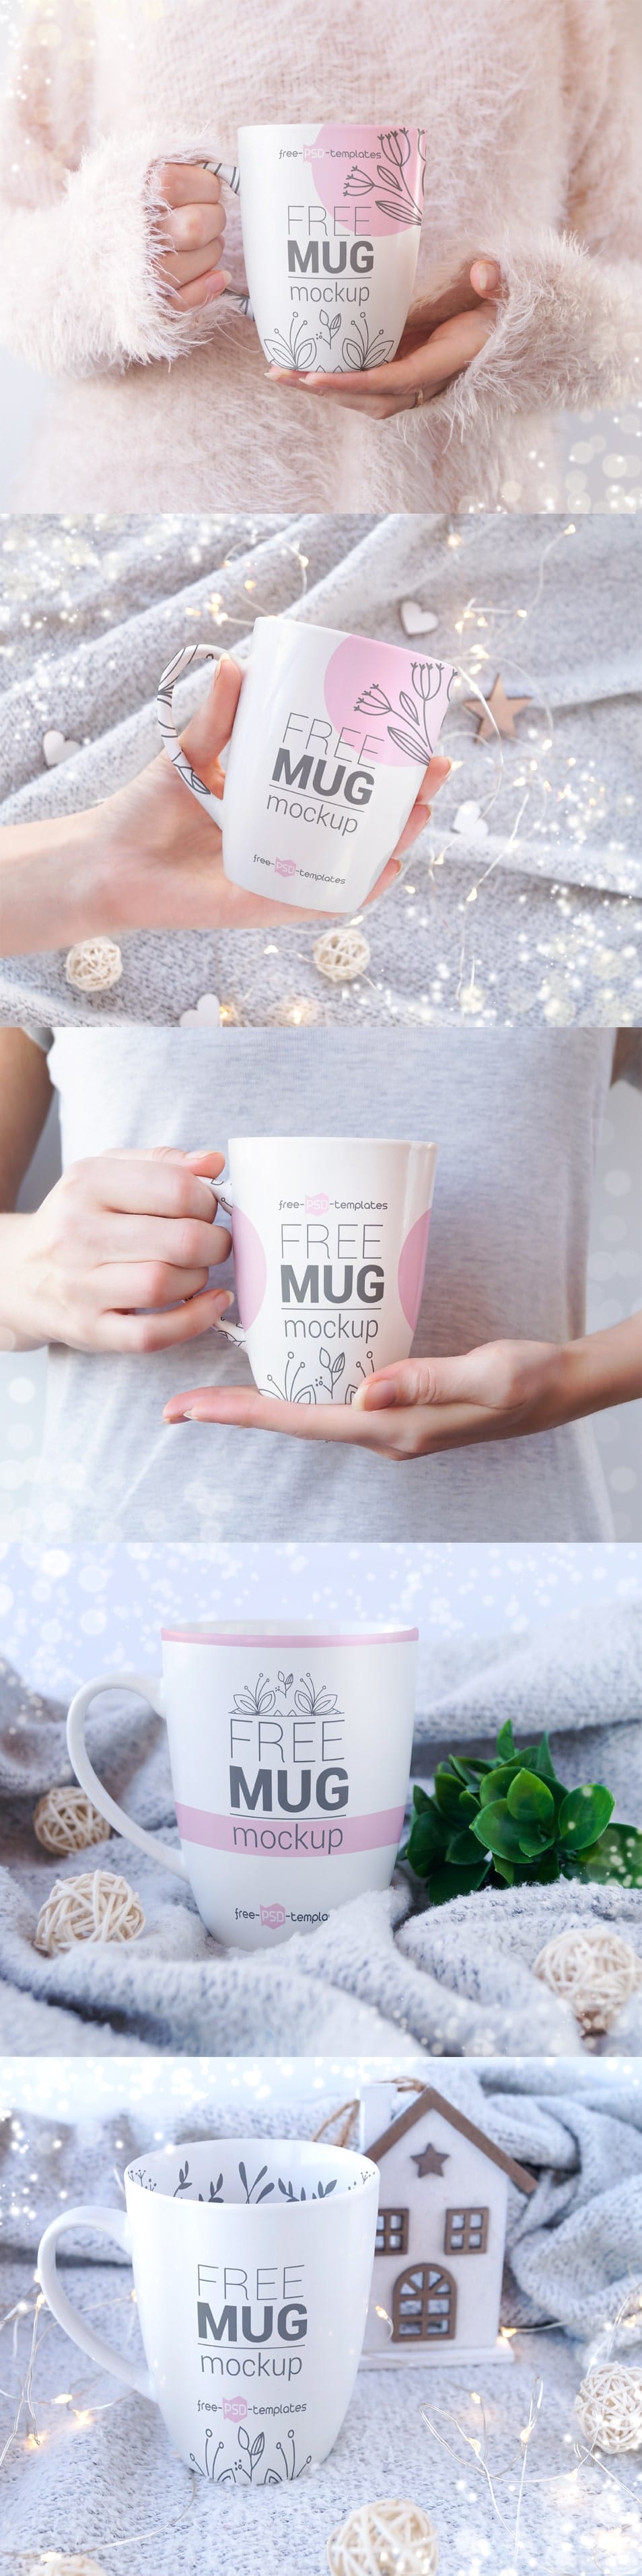 5 Free Mug Mockup Set